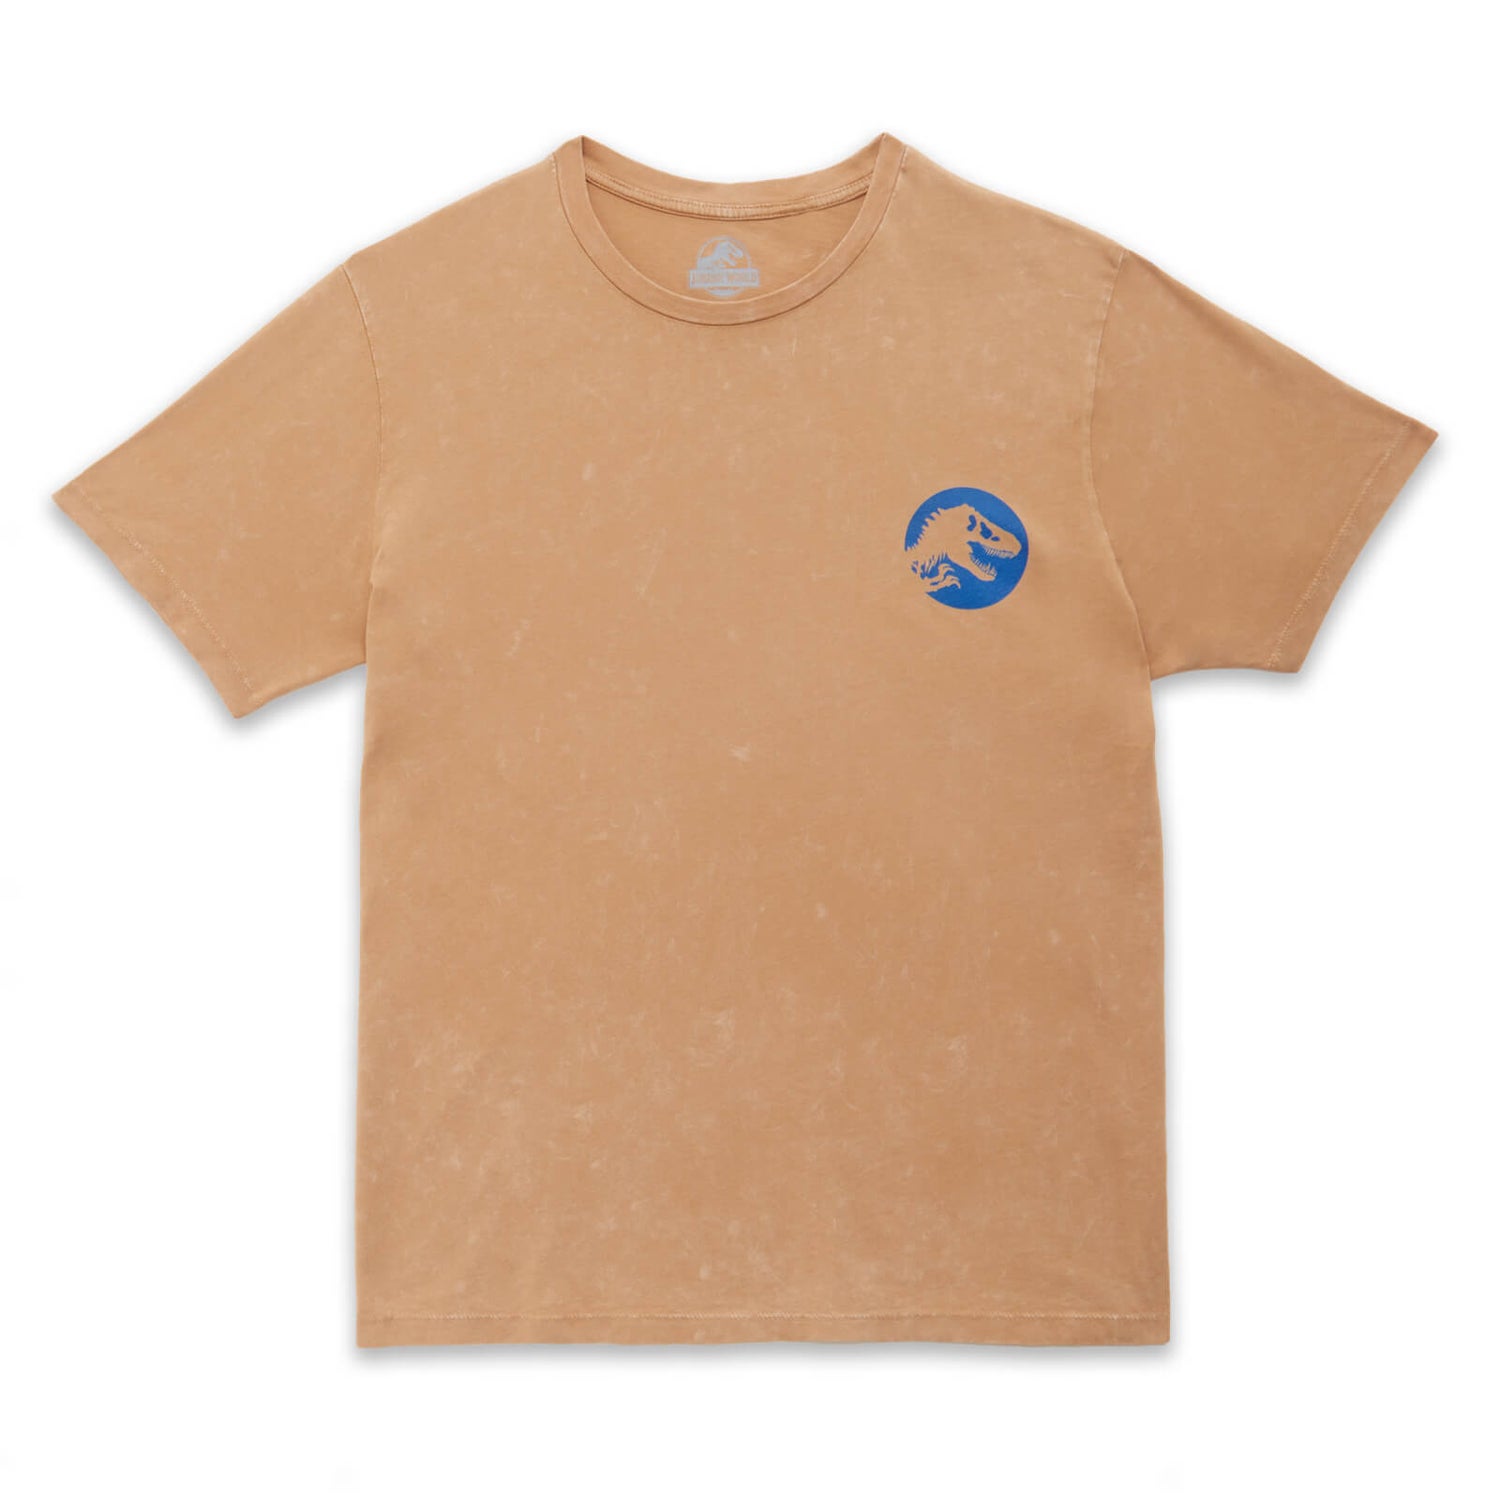 Camiseta unisex Dinosaur Icon de Jurassic Park - Bronceado lavado ácido